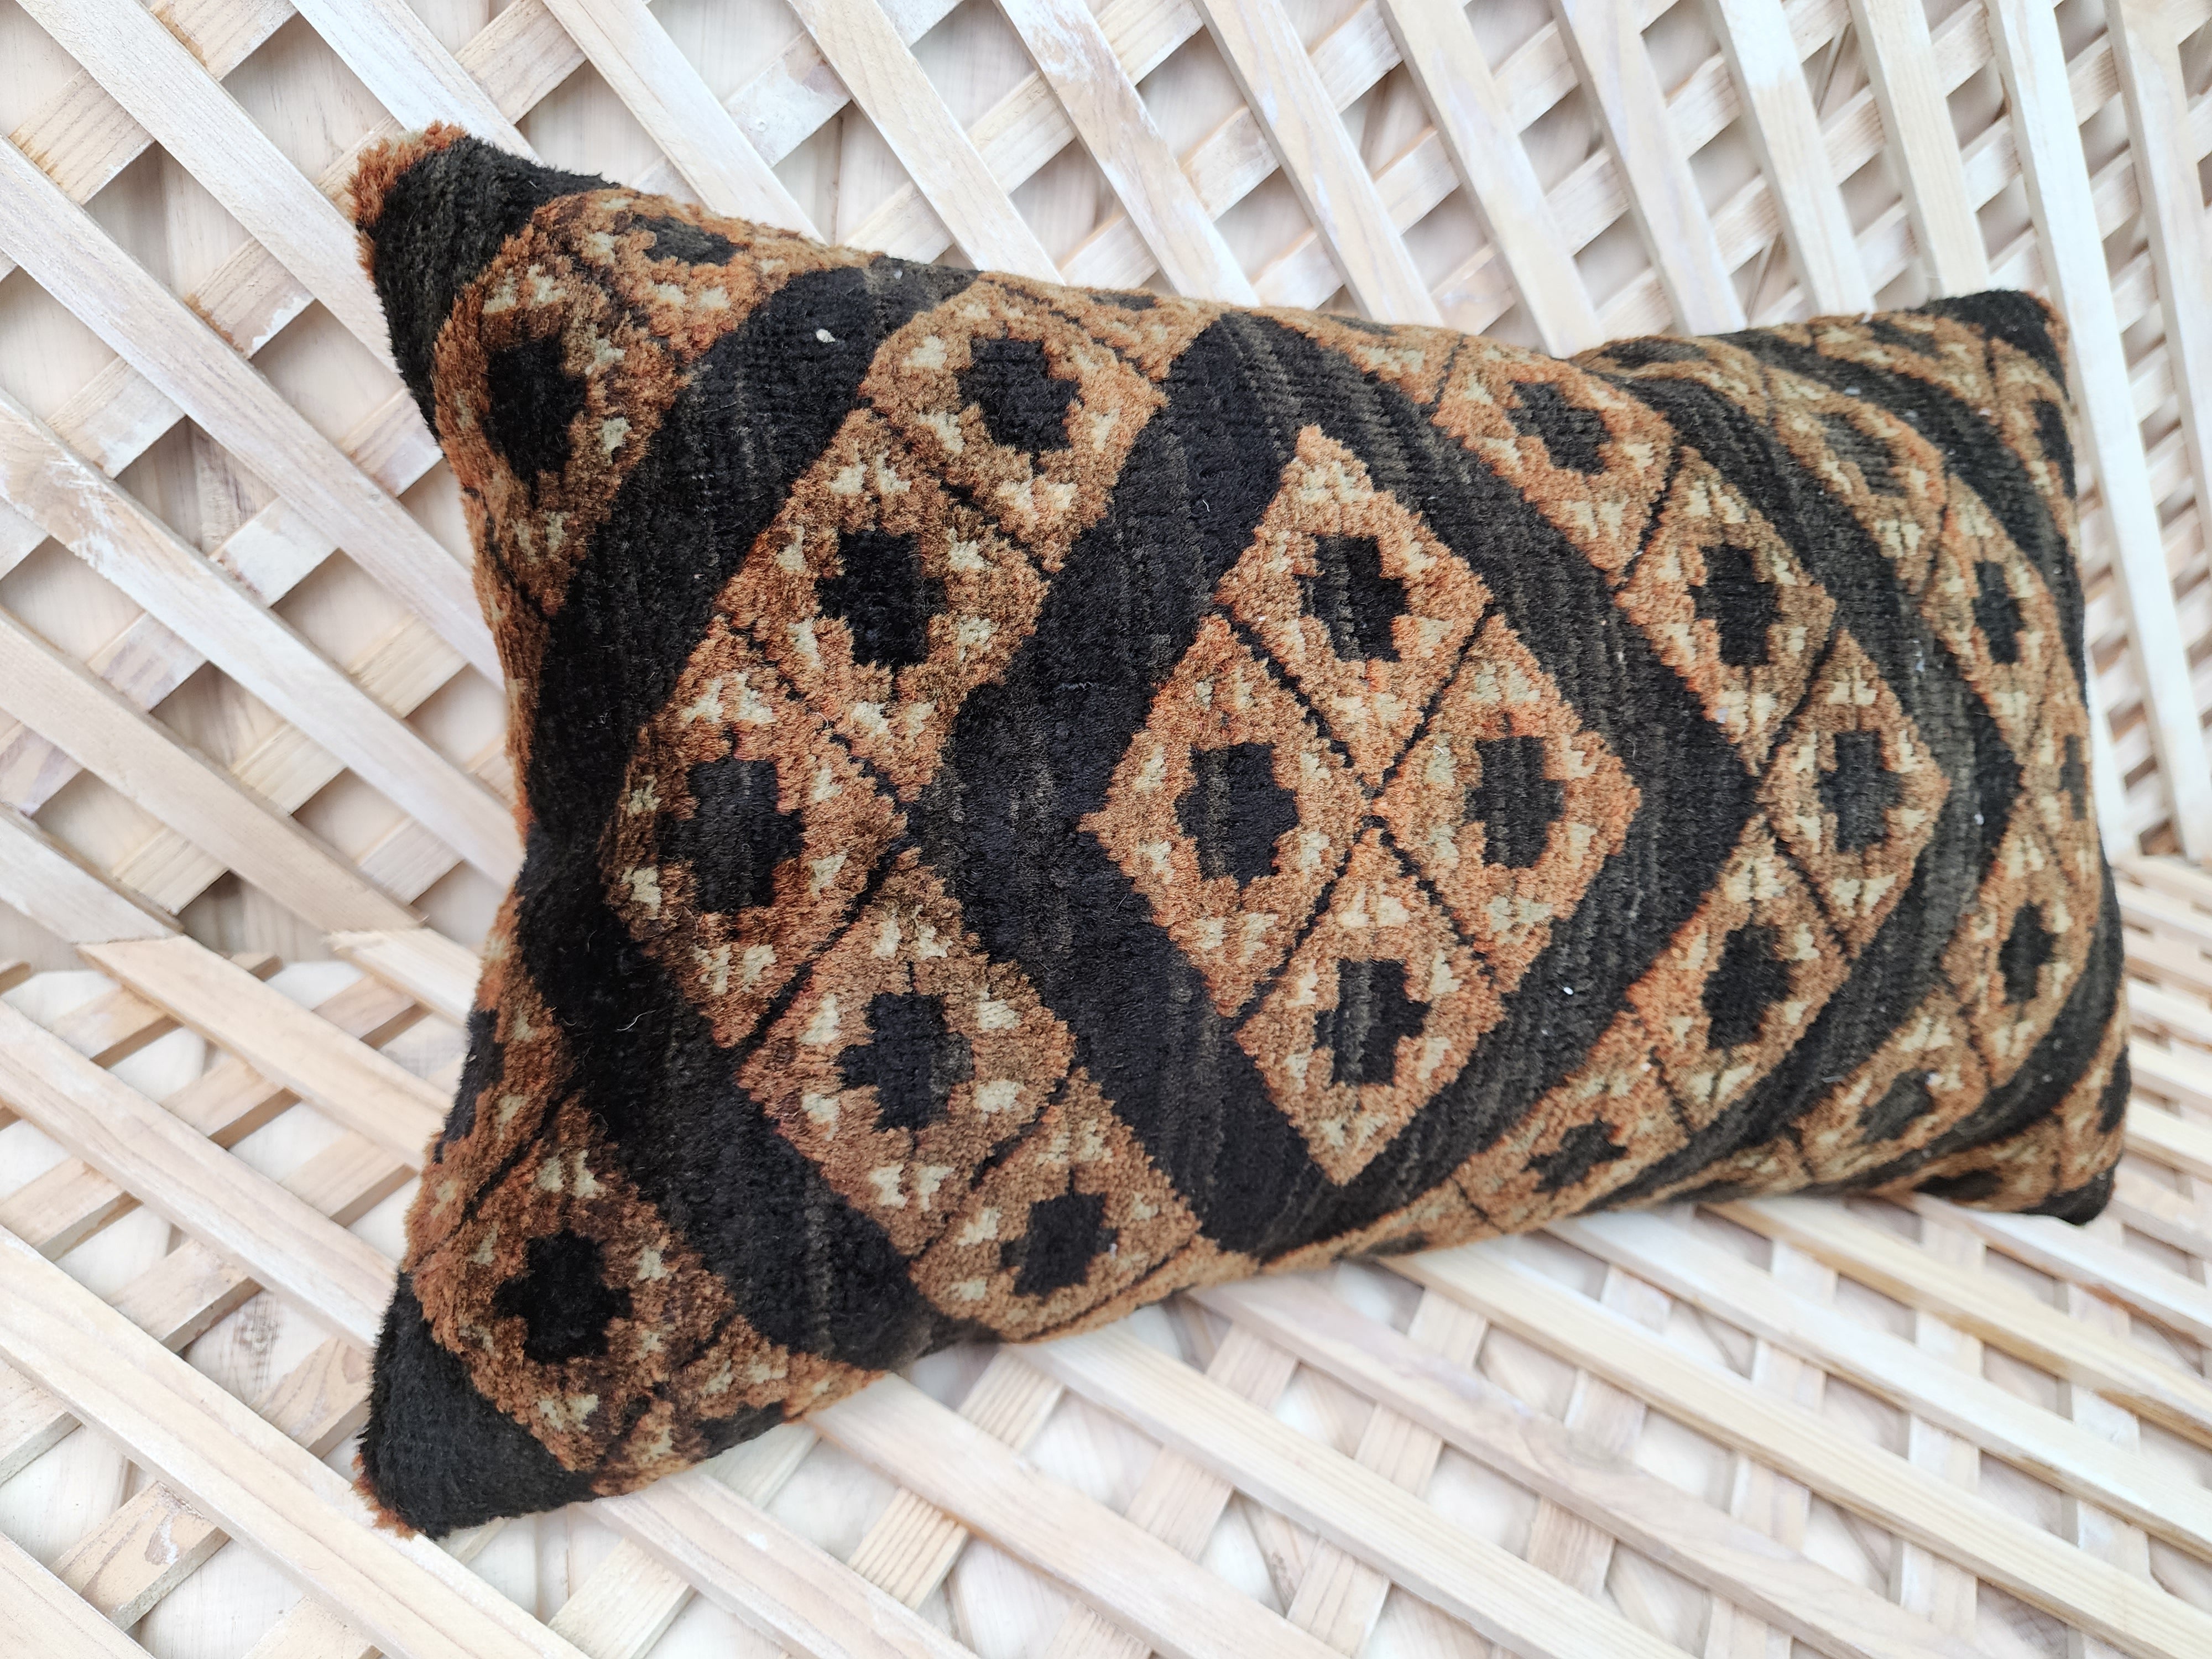 Antique Persian Carpet Pillow Cover 12x20 inch